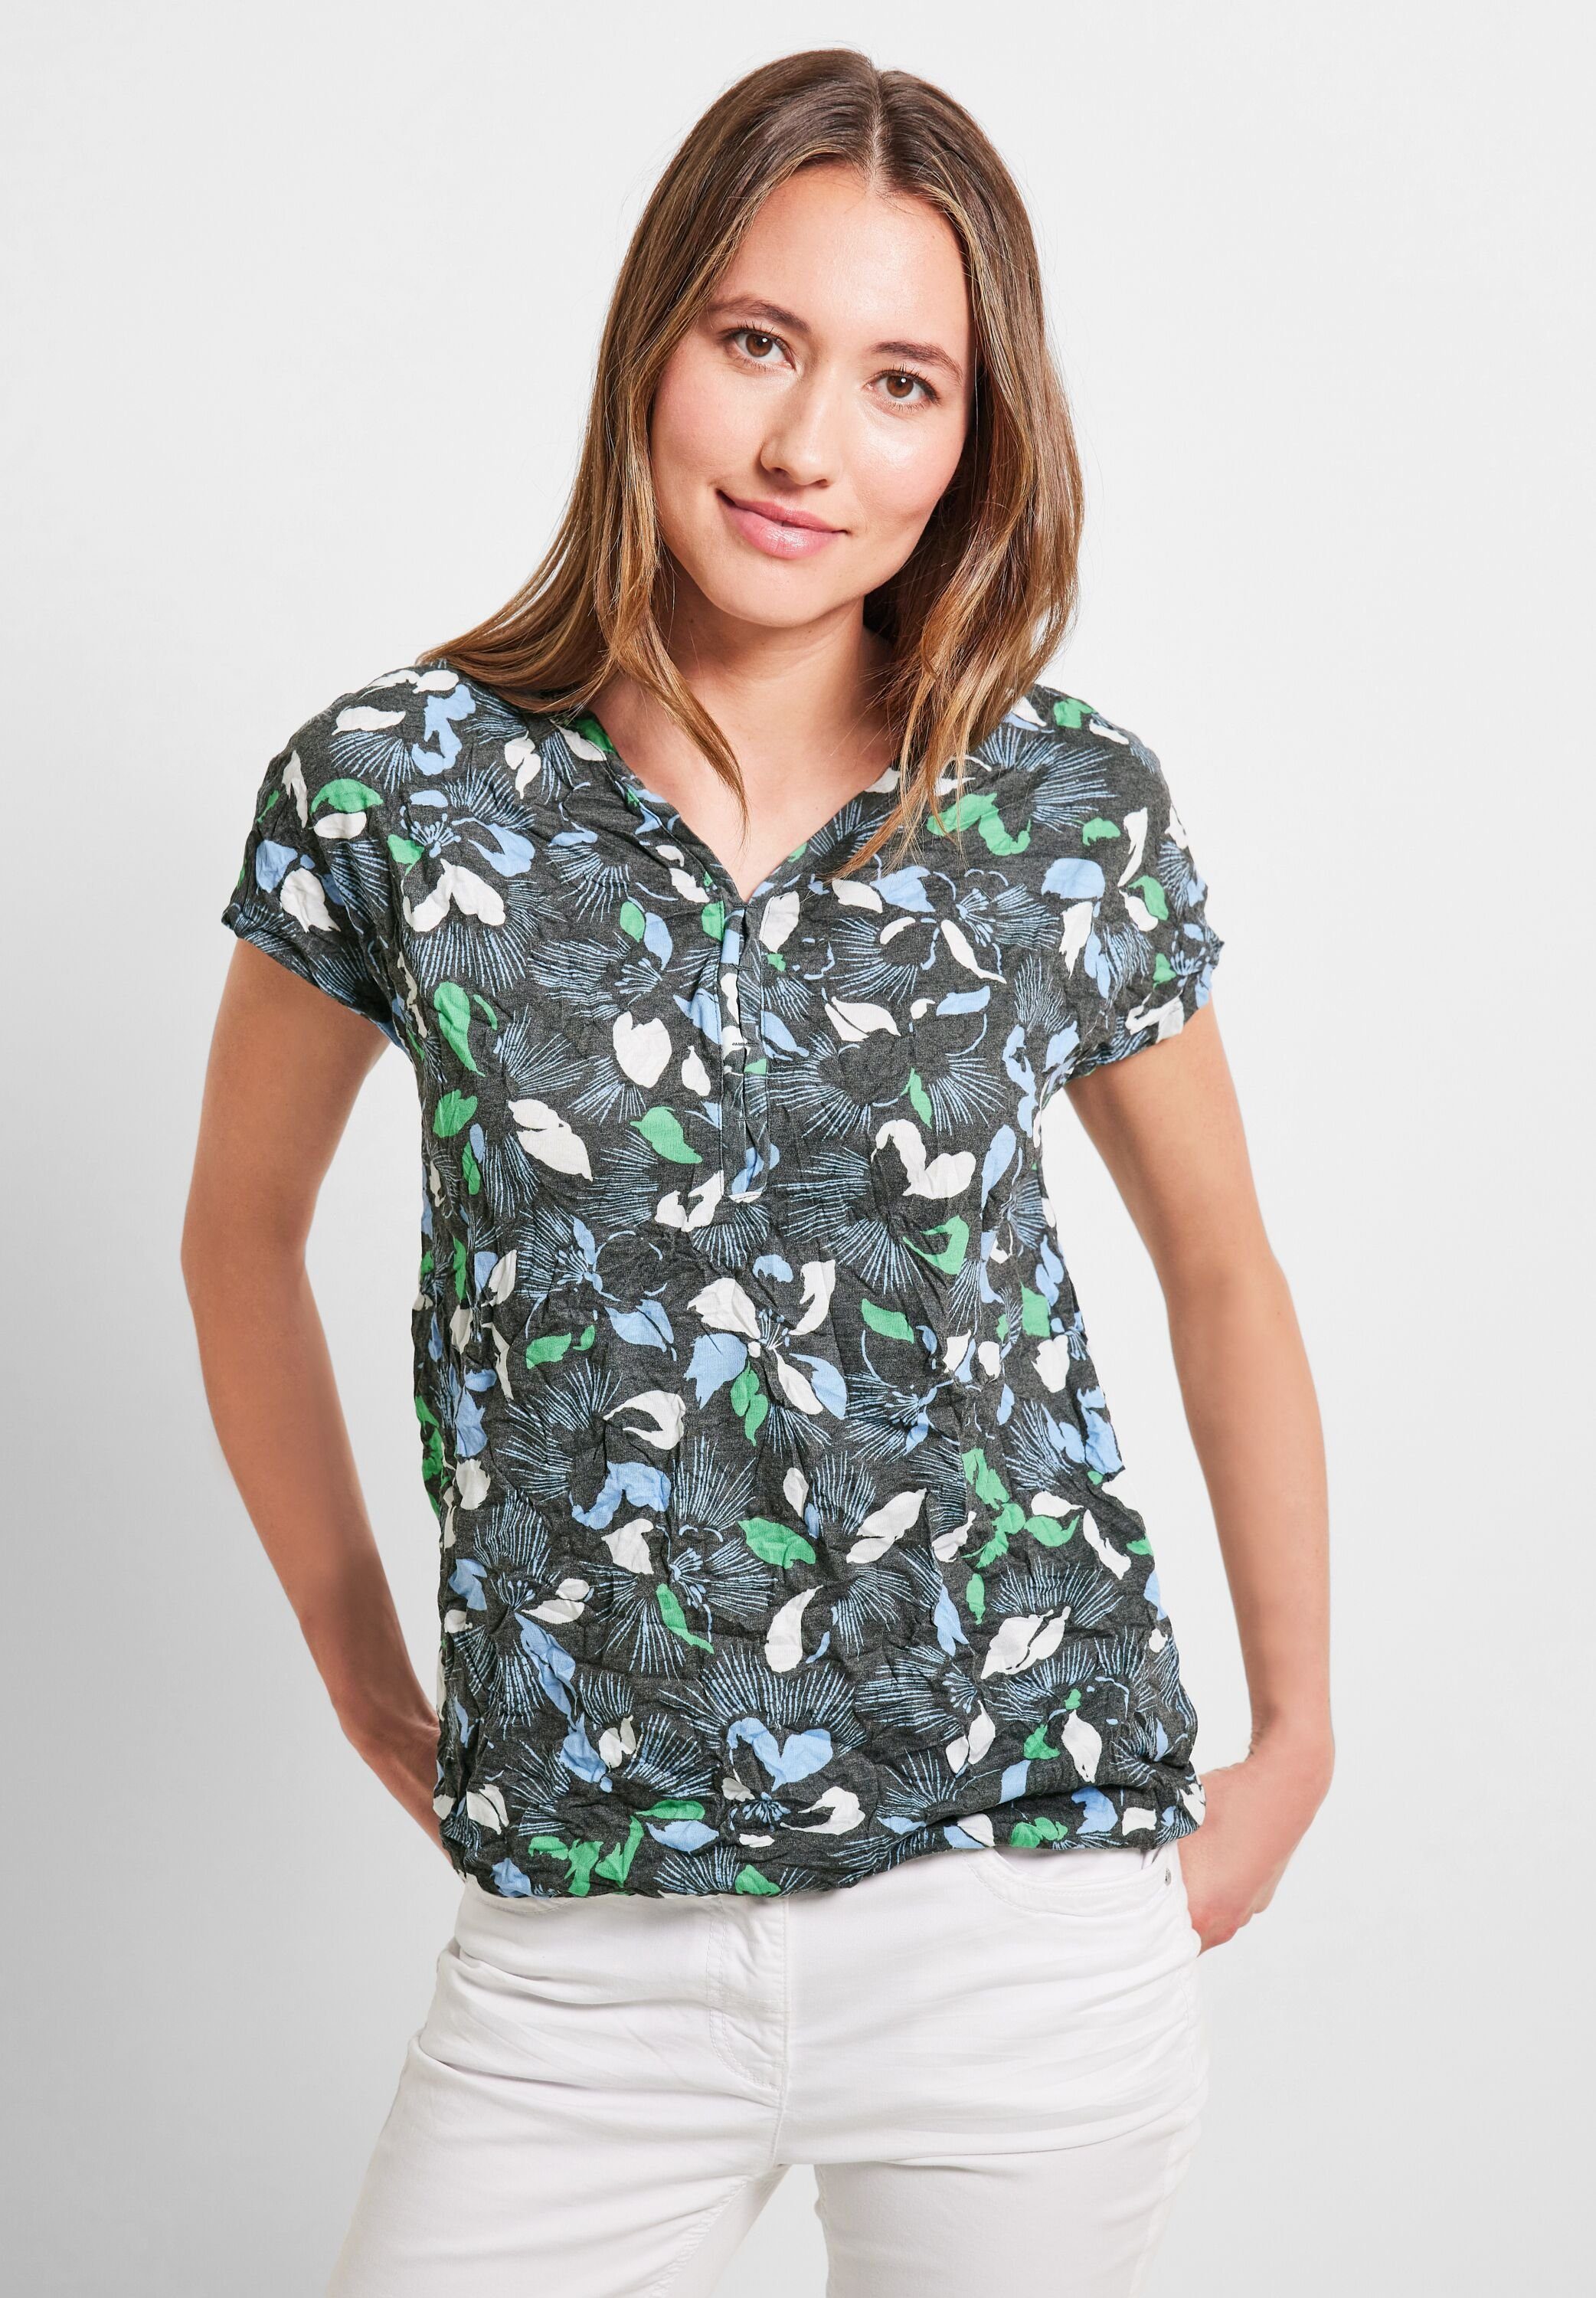 Cecil Print-Shirt aus softem Materialmix easy khaki